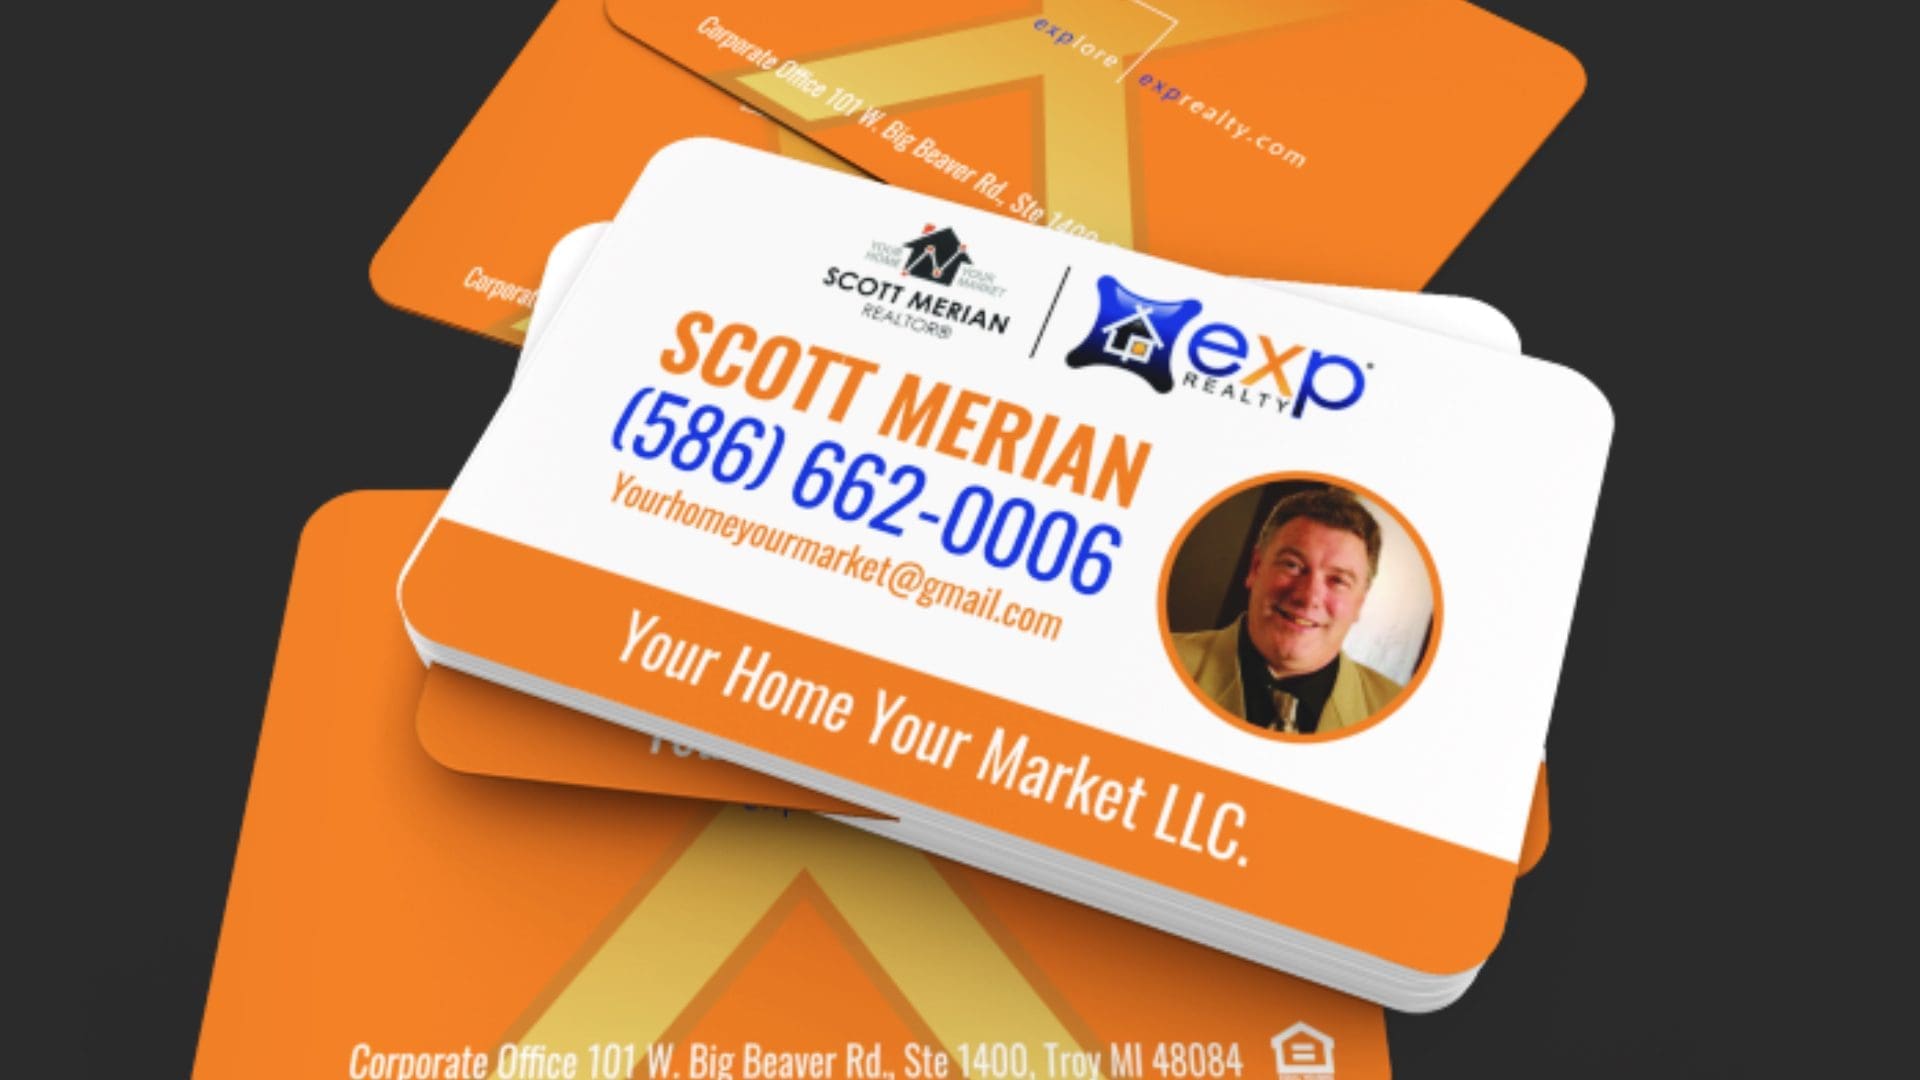 Your Home Your Market LLC - Scott Merian's Cards (2)